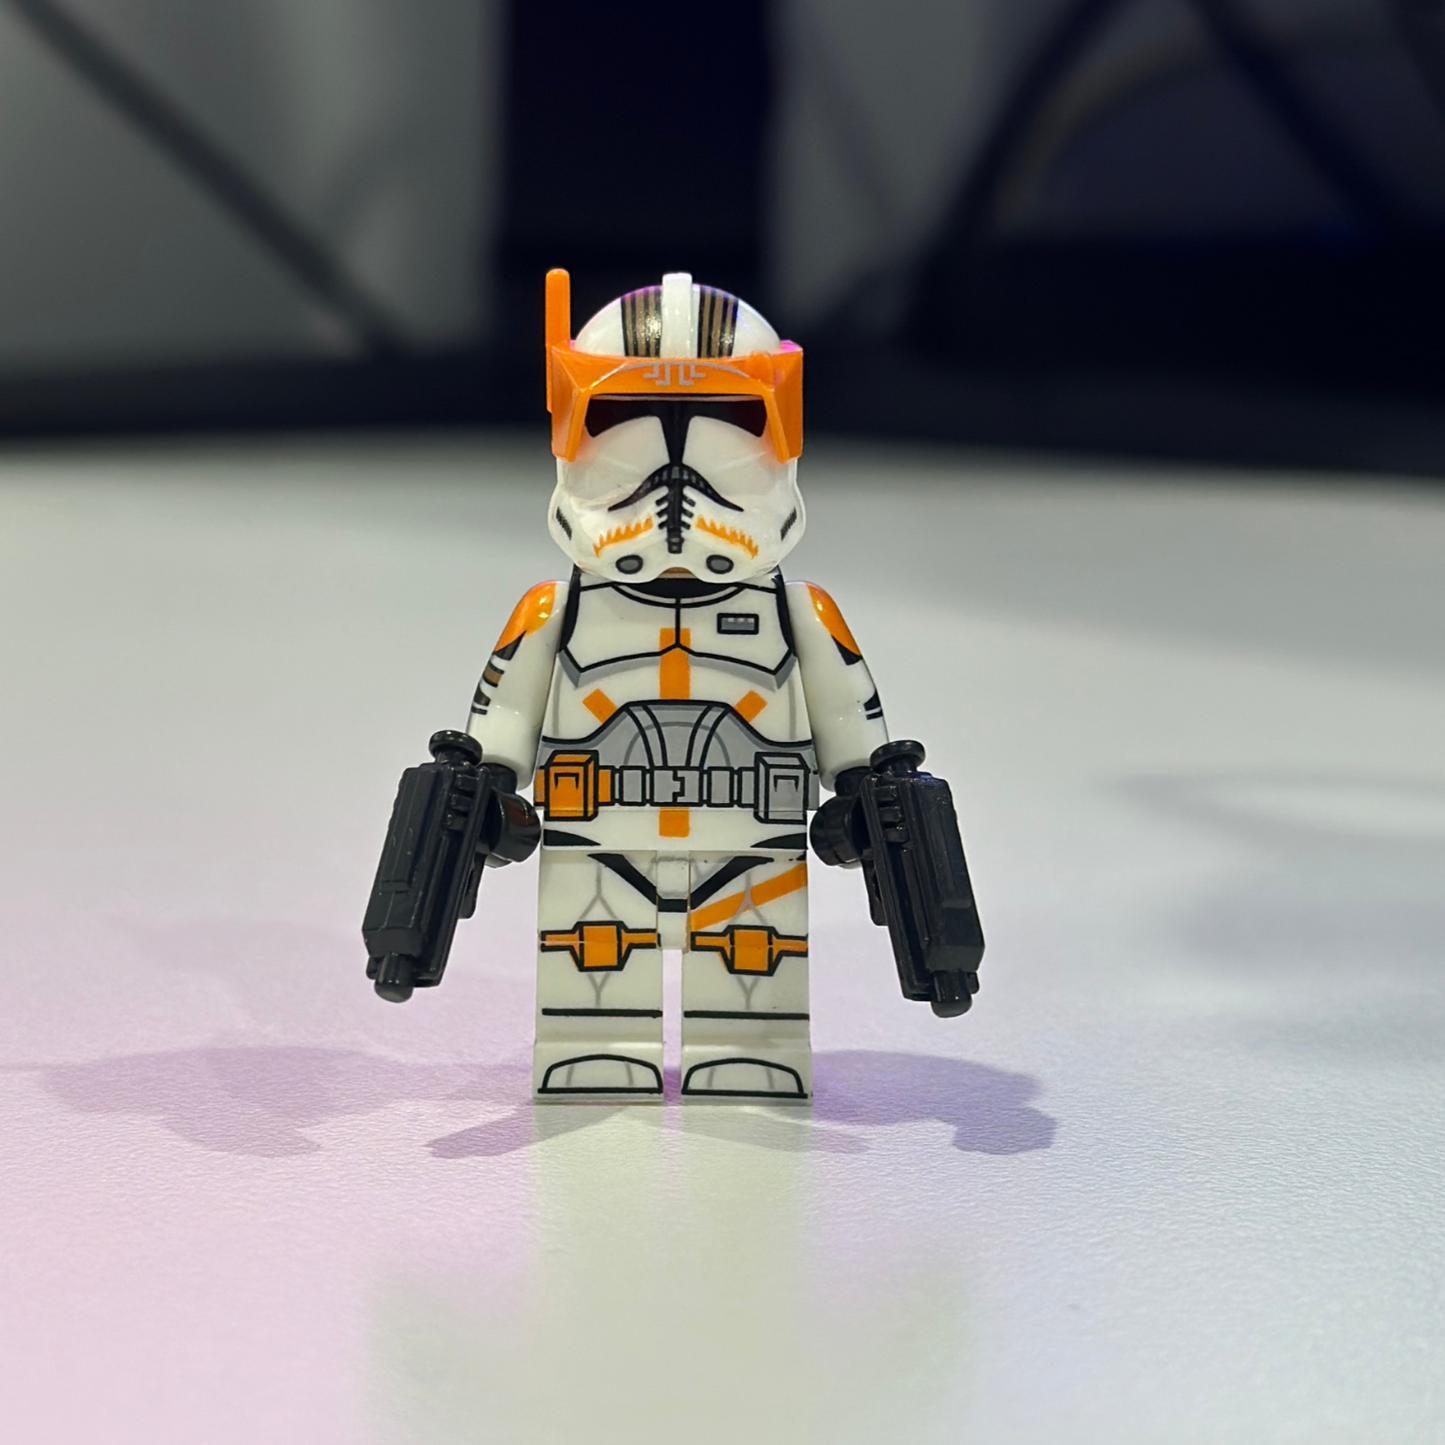 Star Wars Commander Cody Clone Trooper Minifigure - 212th Battalion